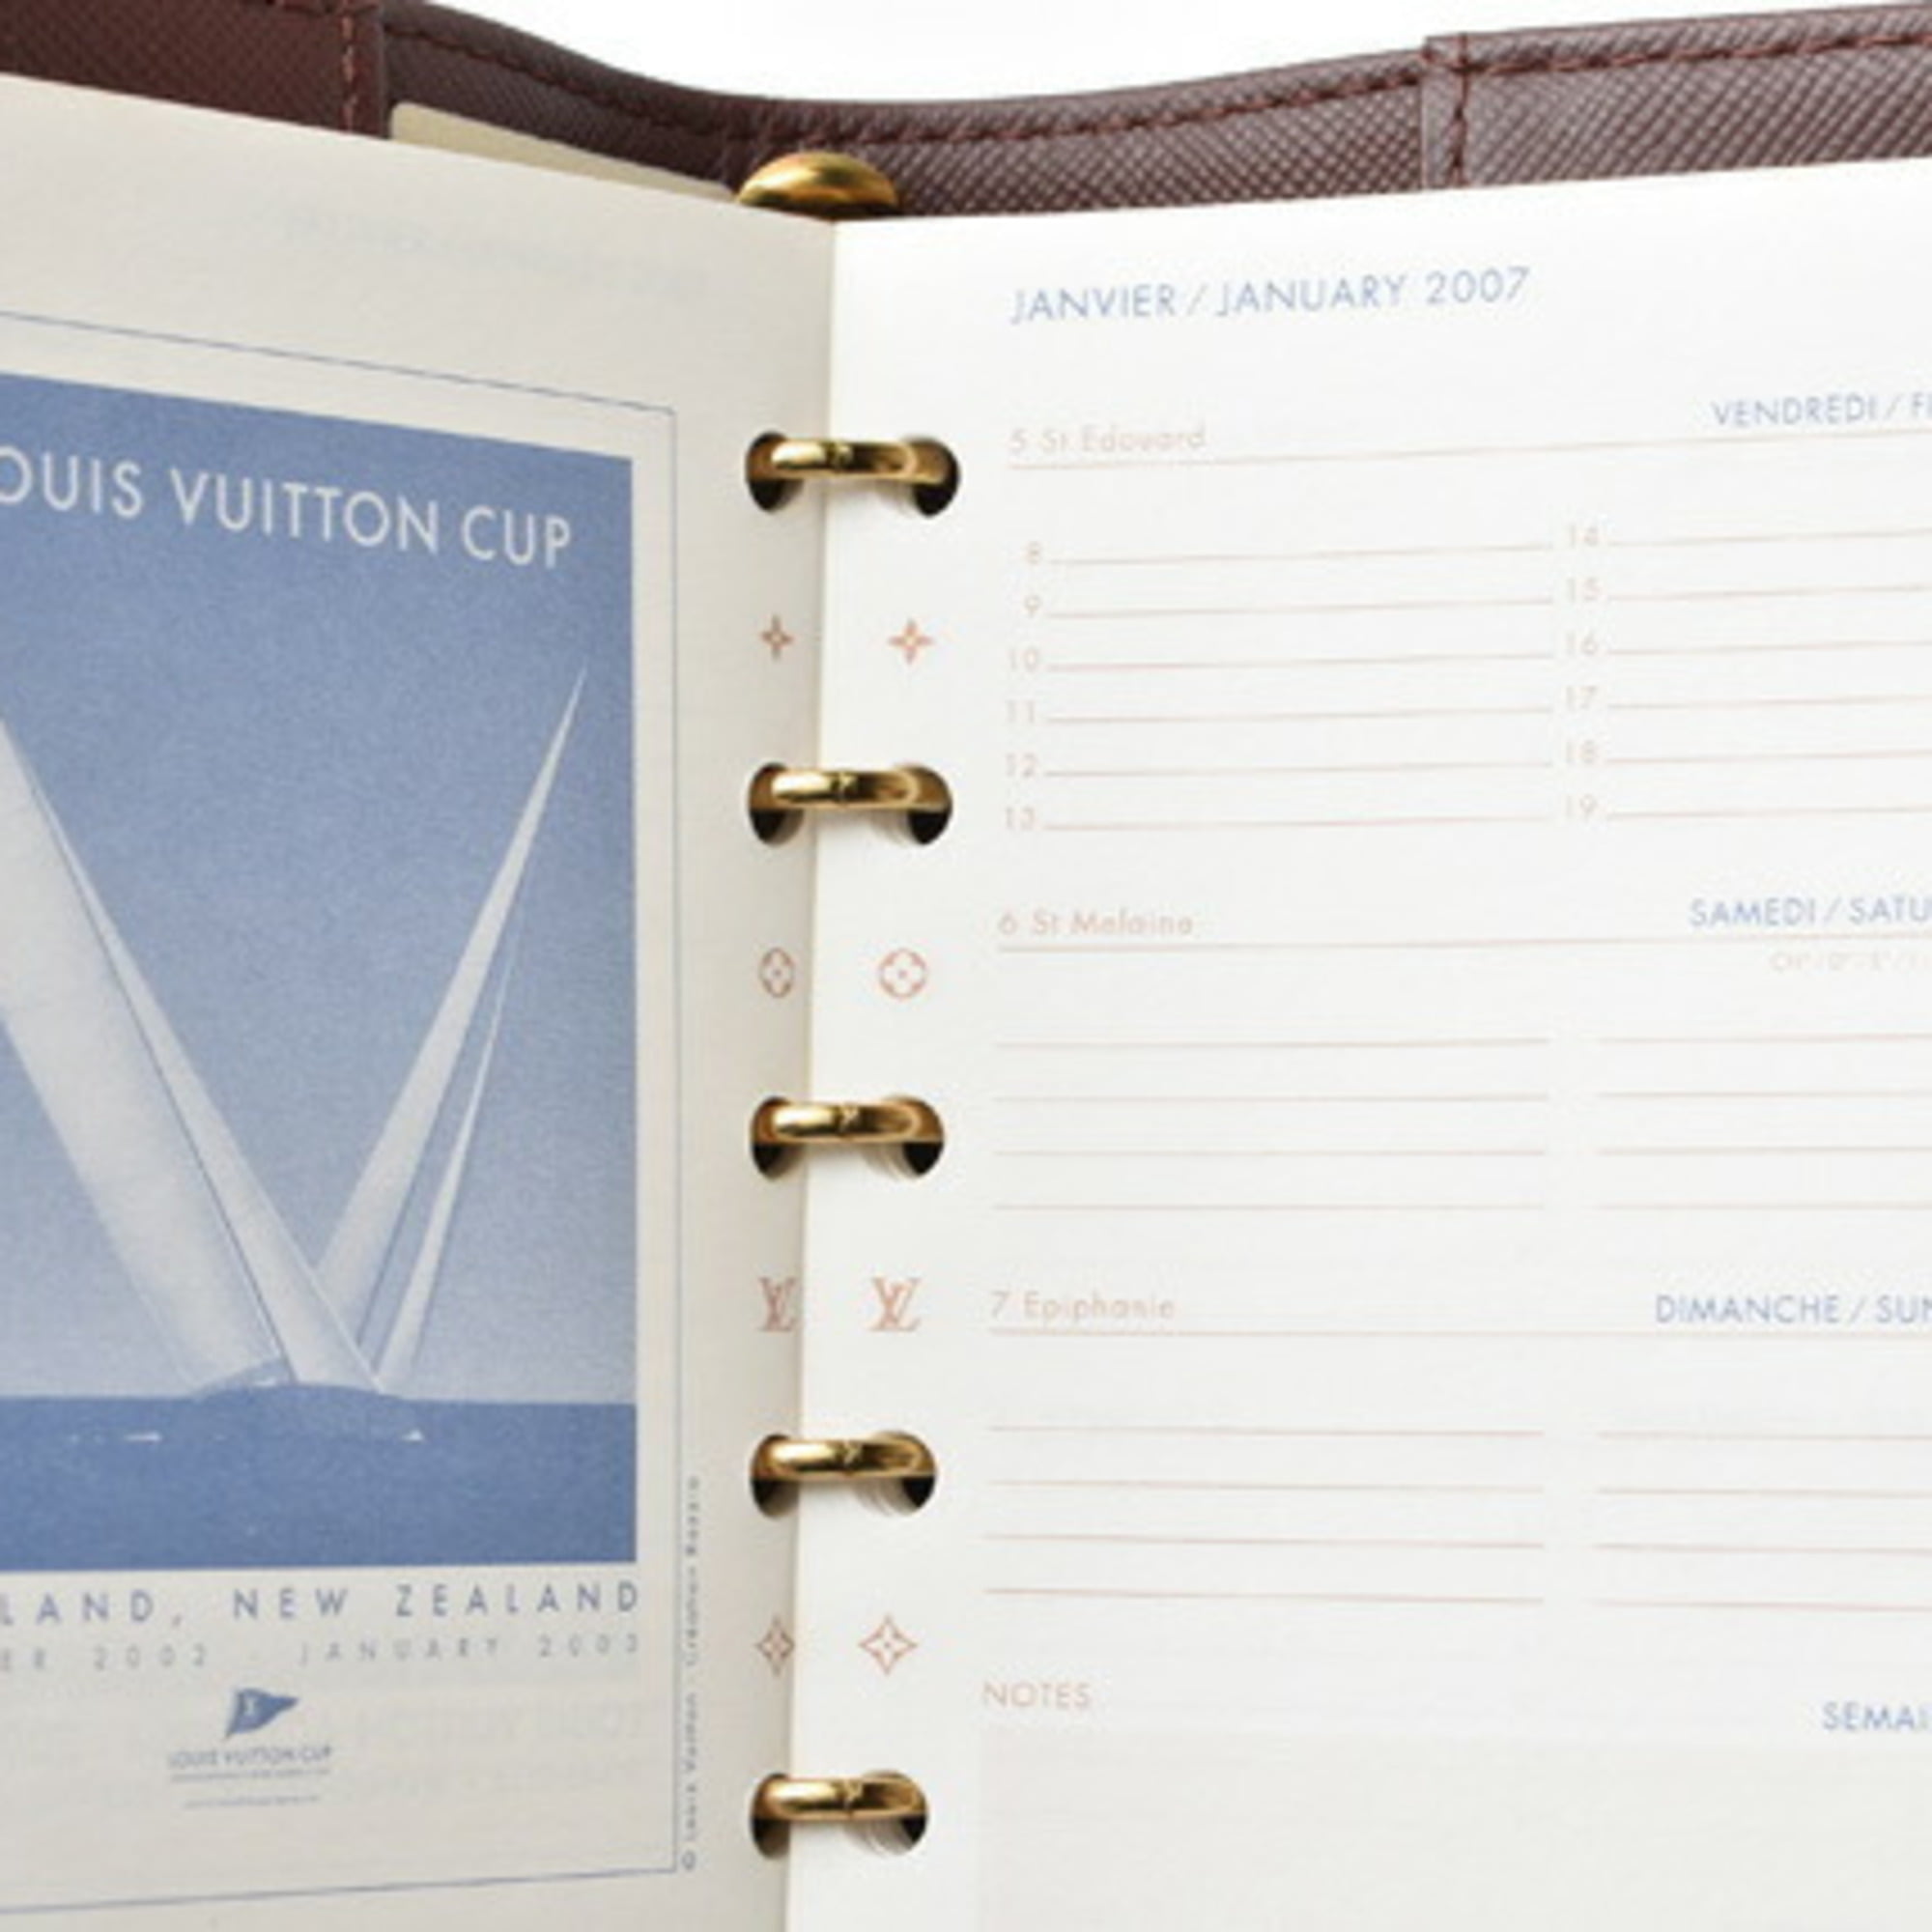 Authenticated Used Louis Vuitton Monogram Miroir Agenda PM Ladies Notebook  Cover R20962 PVC Gold 